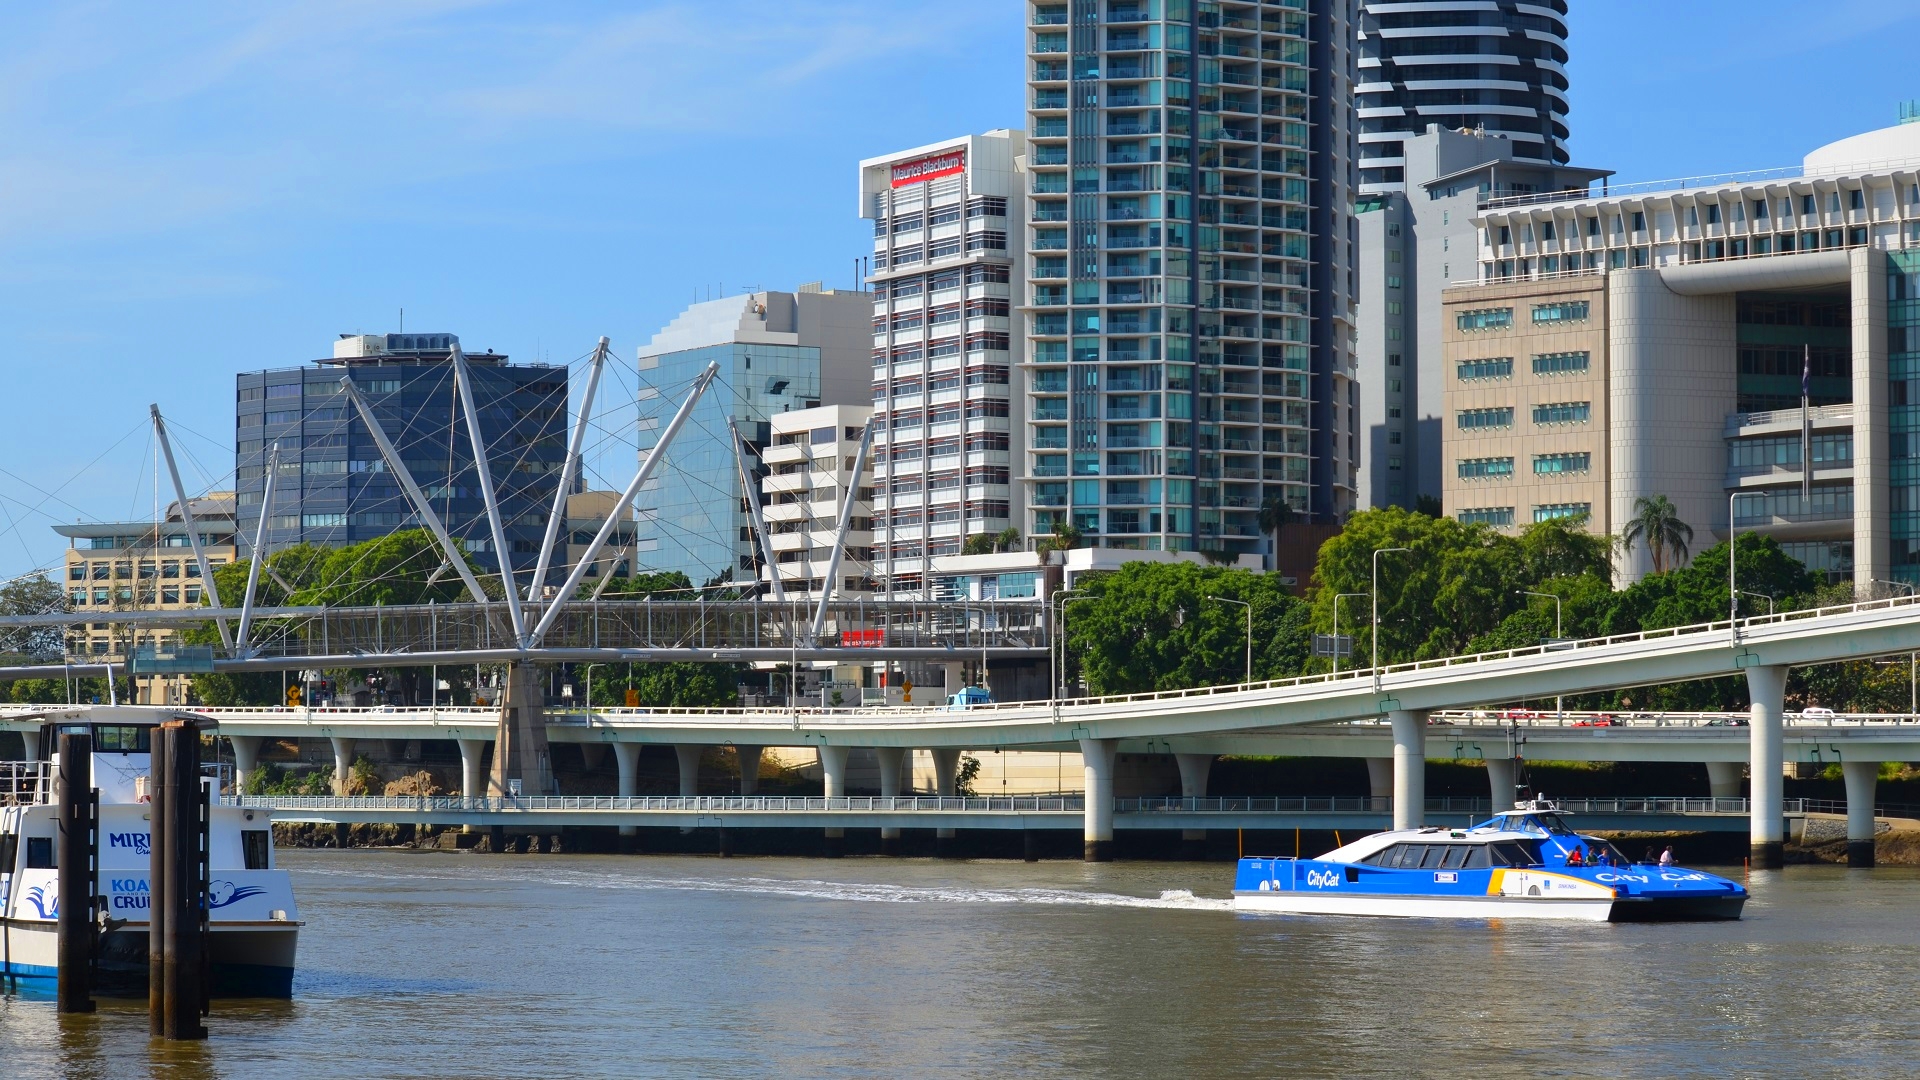 Brisbane Australia Building Ferry Boat River Queensland 1920x1080